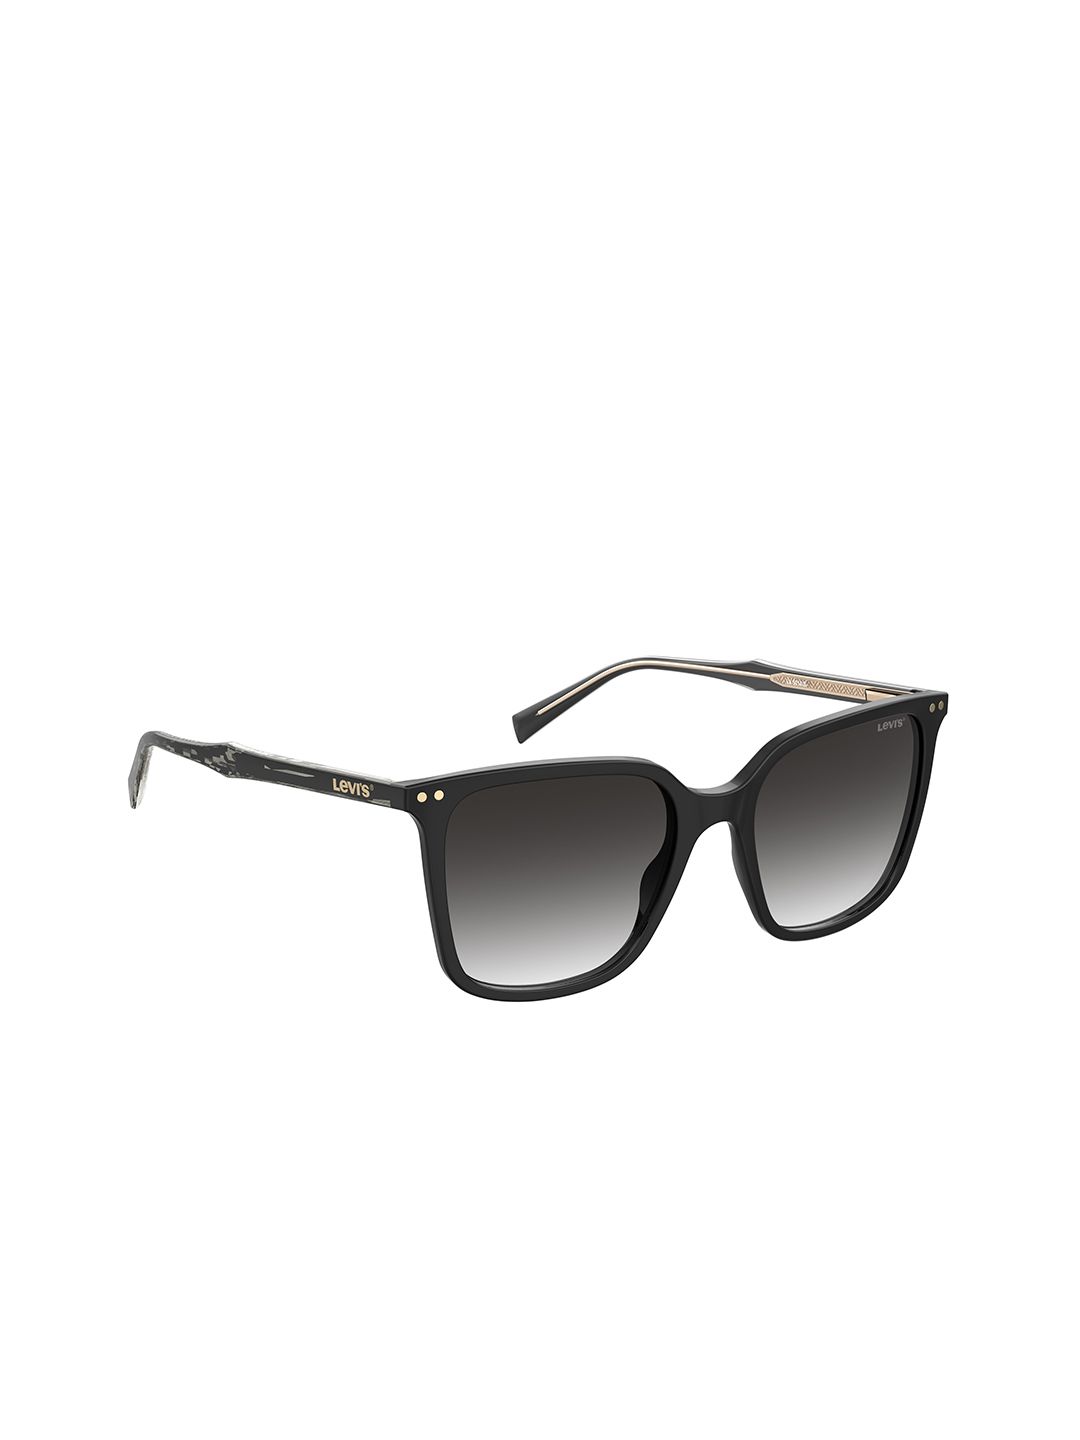 Levis Women Grey Lens & Black UV Protected Lens Wayfarer Sunglasses LV 5014/S 807 559O Price in India